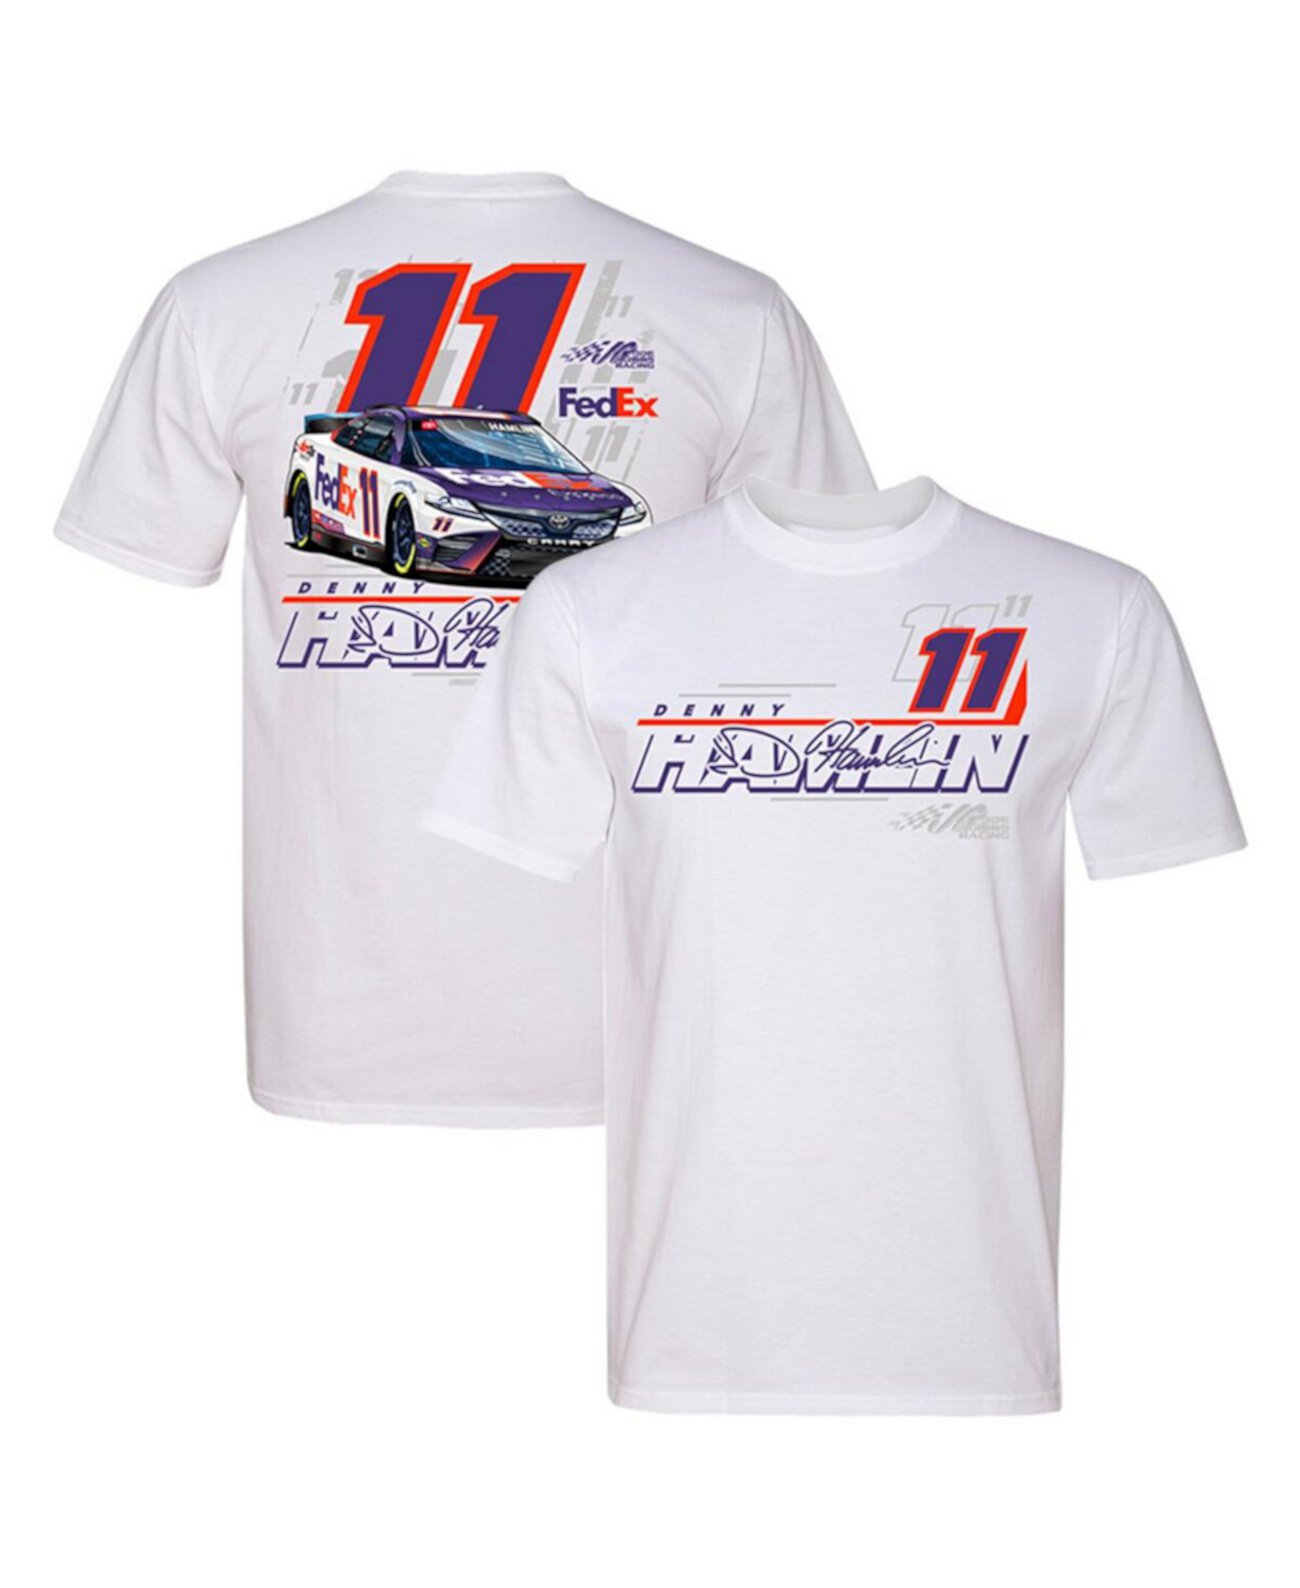 Мужская белая футболка Denny Hamlin FedEx Car 2-Spot Joe Gibbs Racing Team Collection